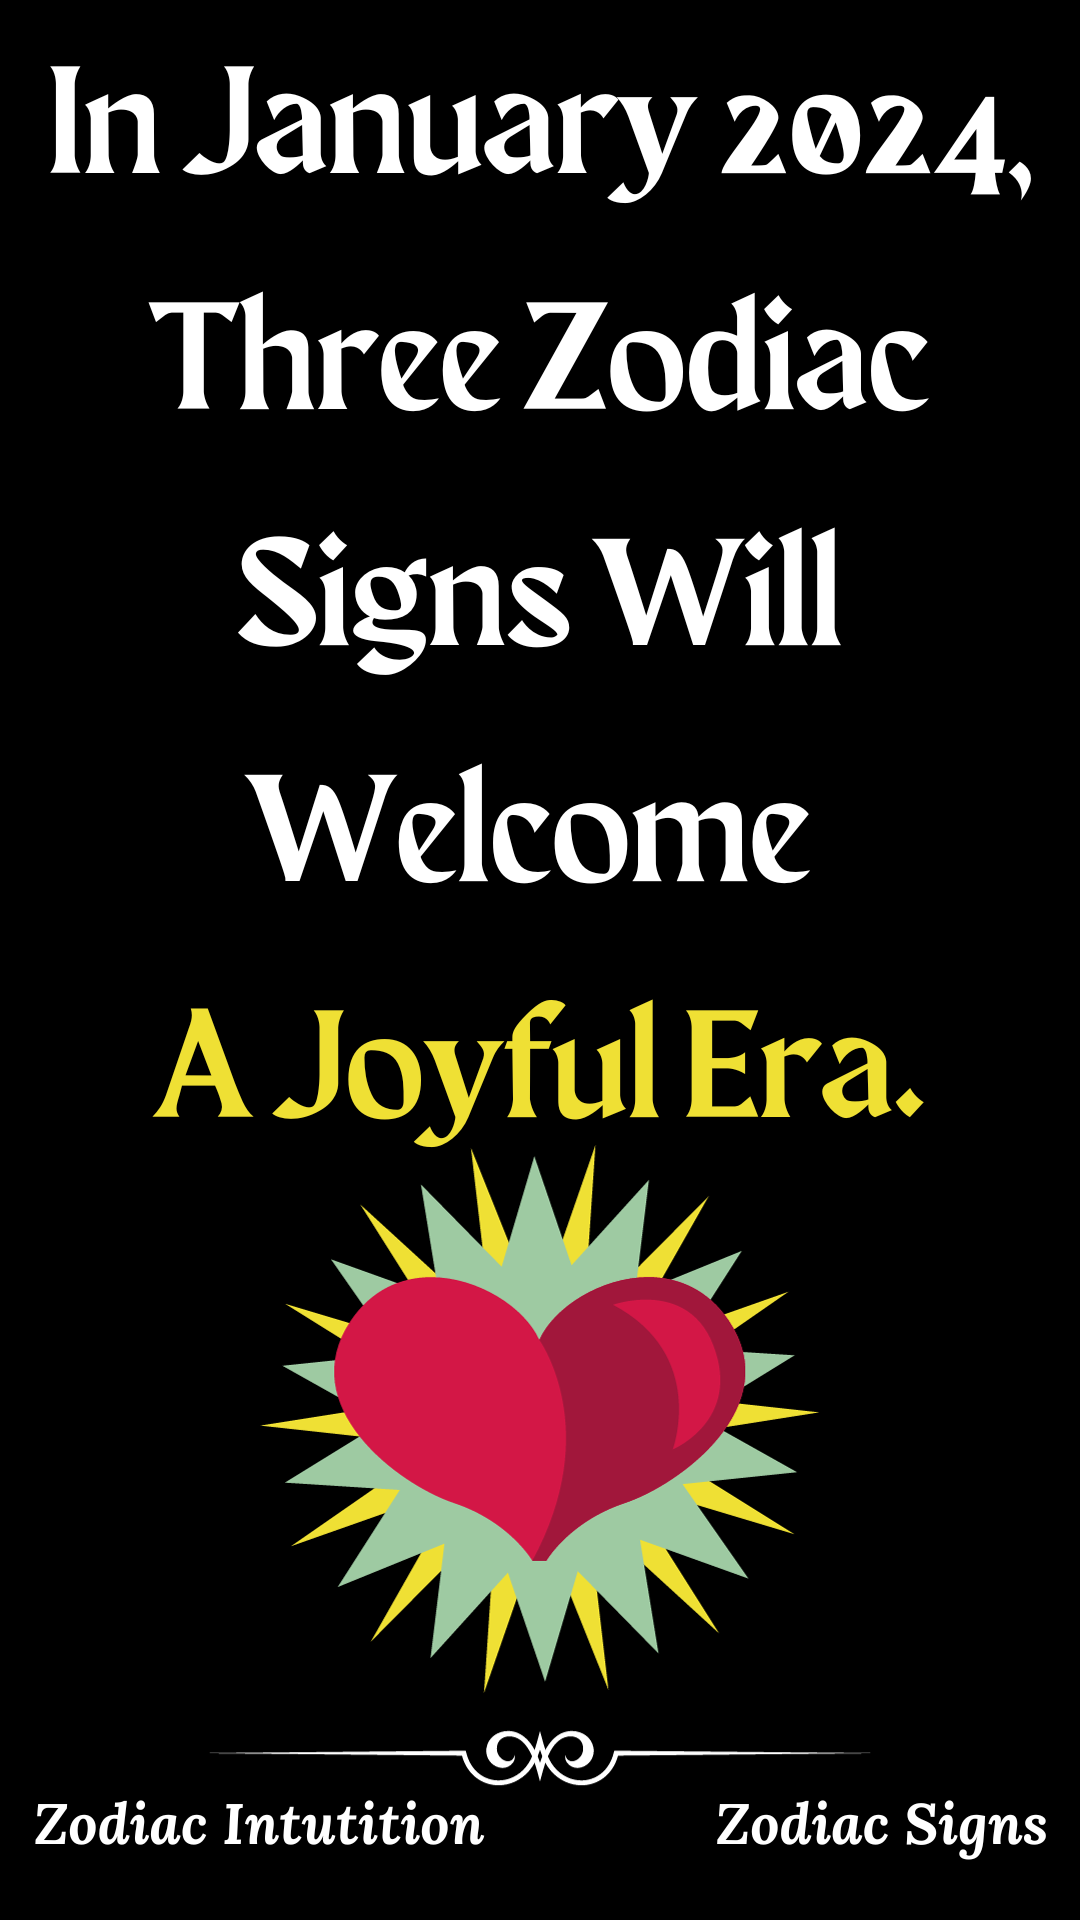 In January 2024, Three Zodiac Signs Will Welcome A Joyful Era.